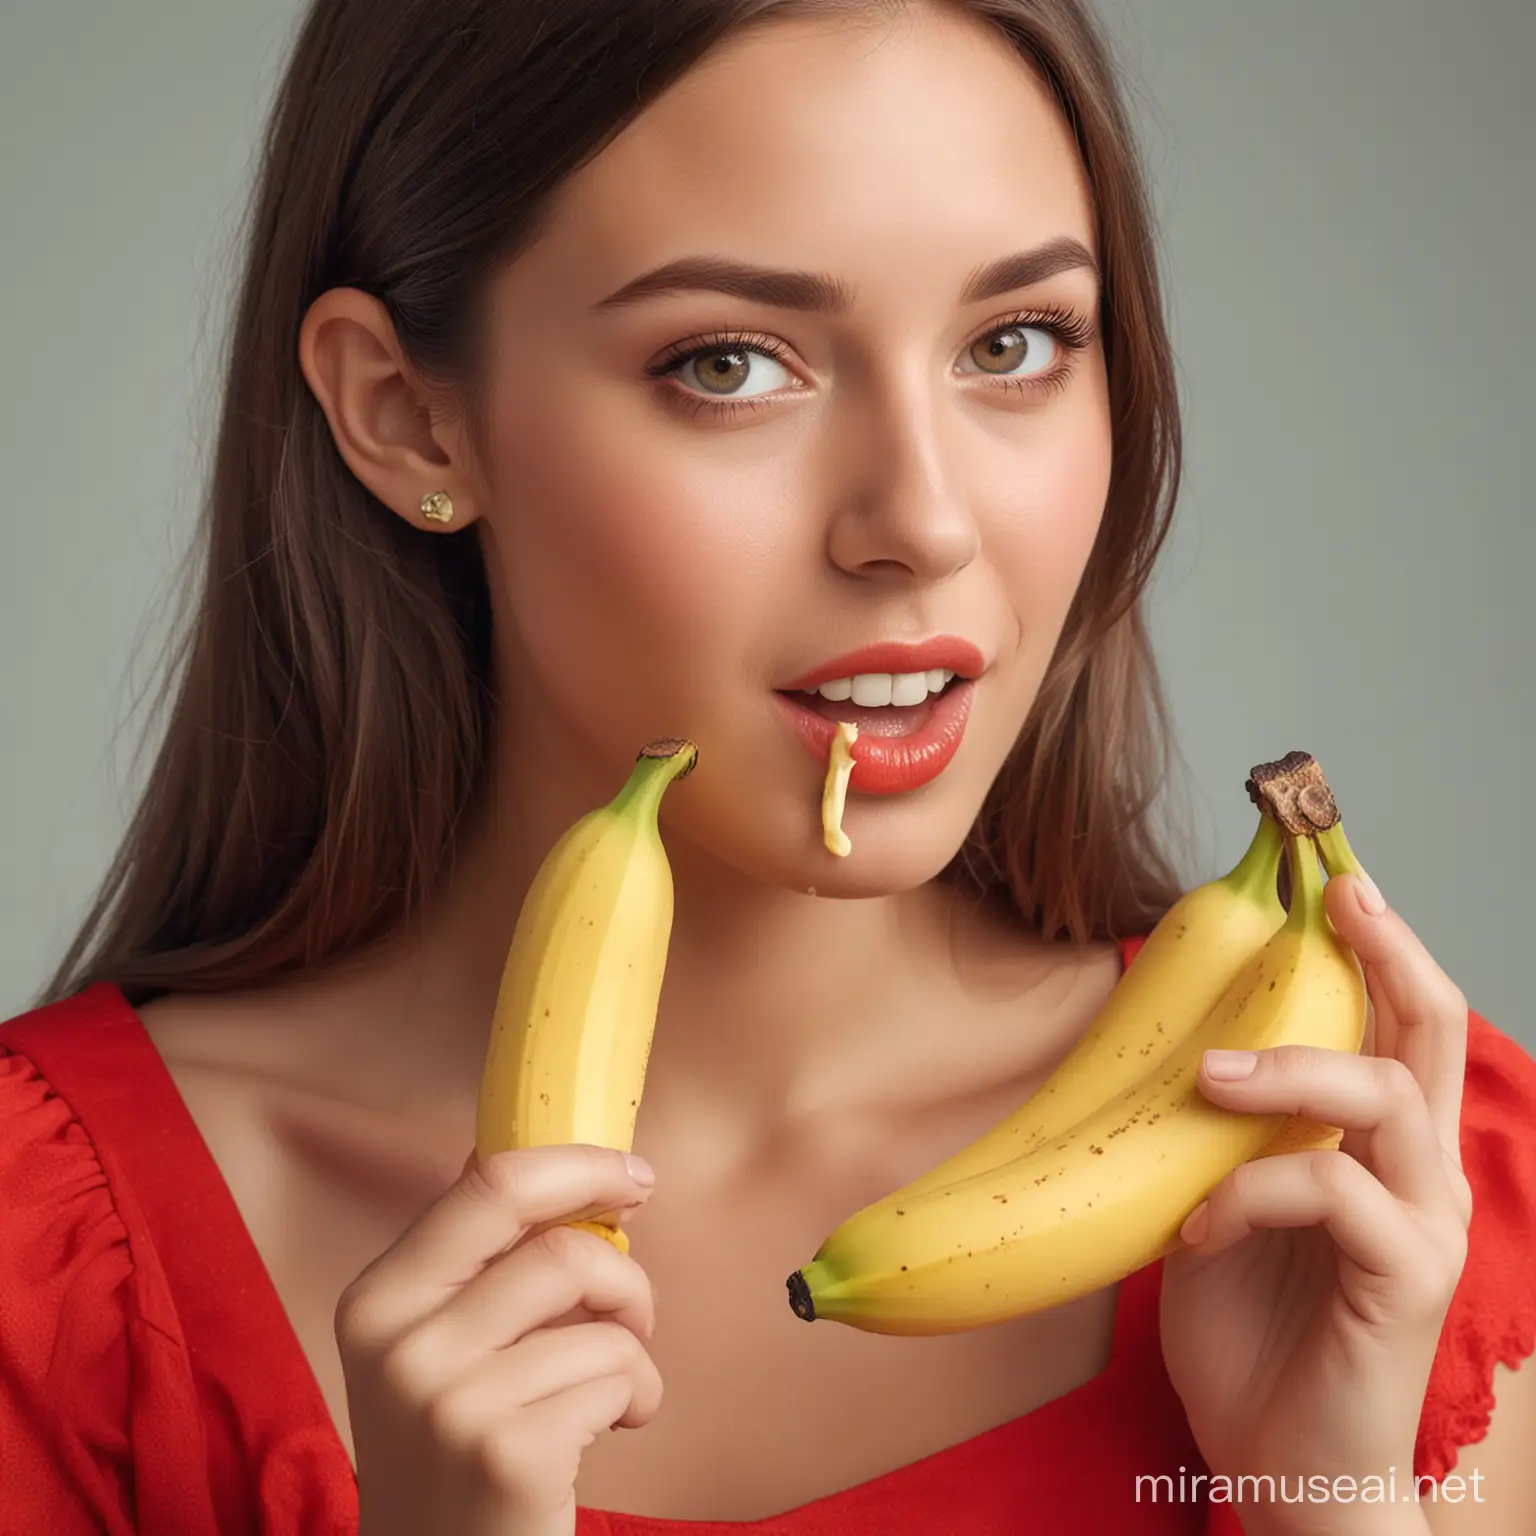 Closeup of realistic girl wearing red dress eating creamy banana